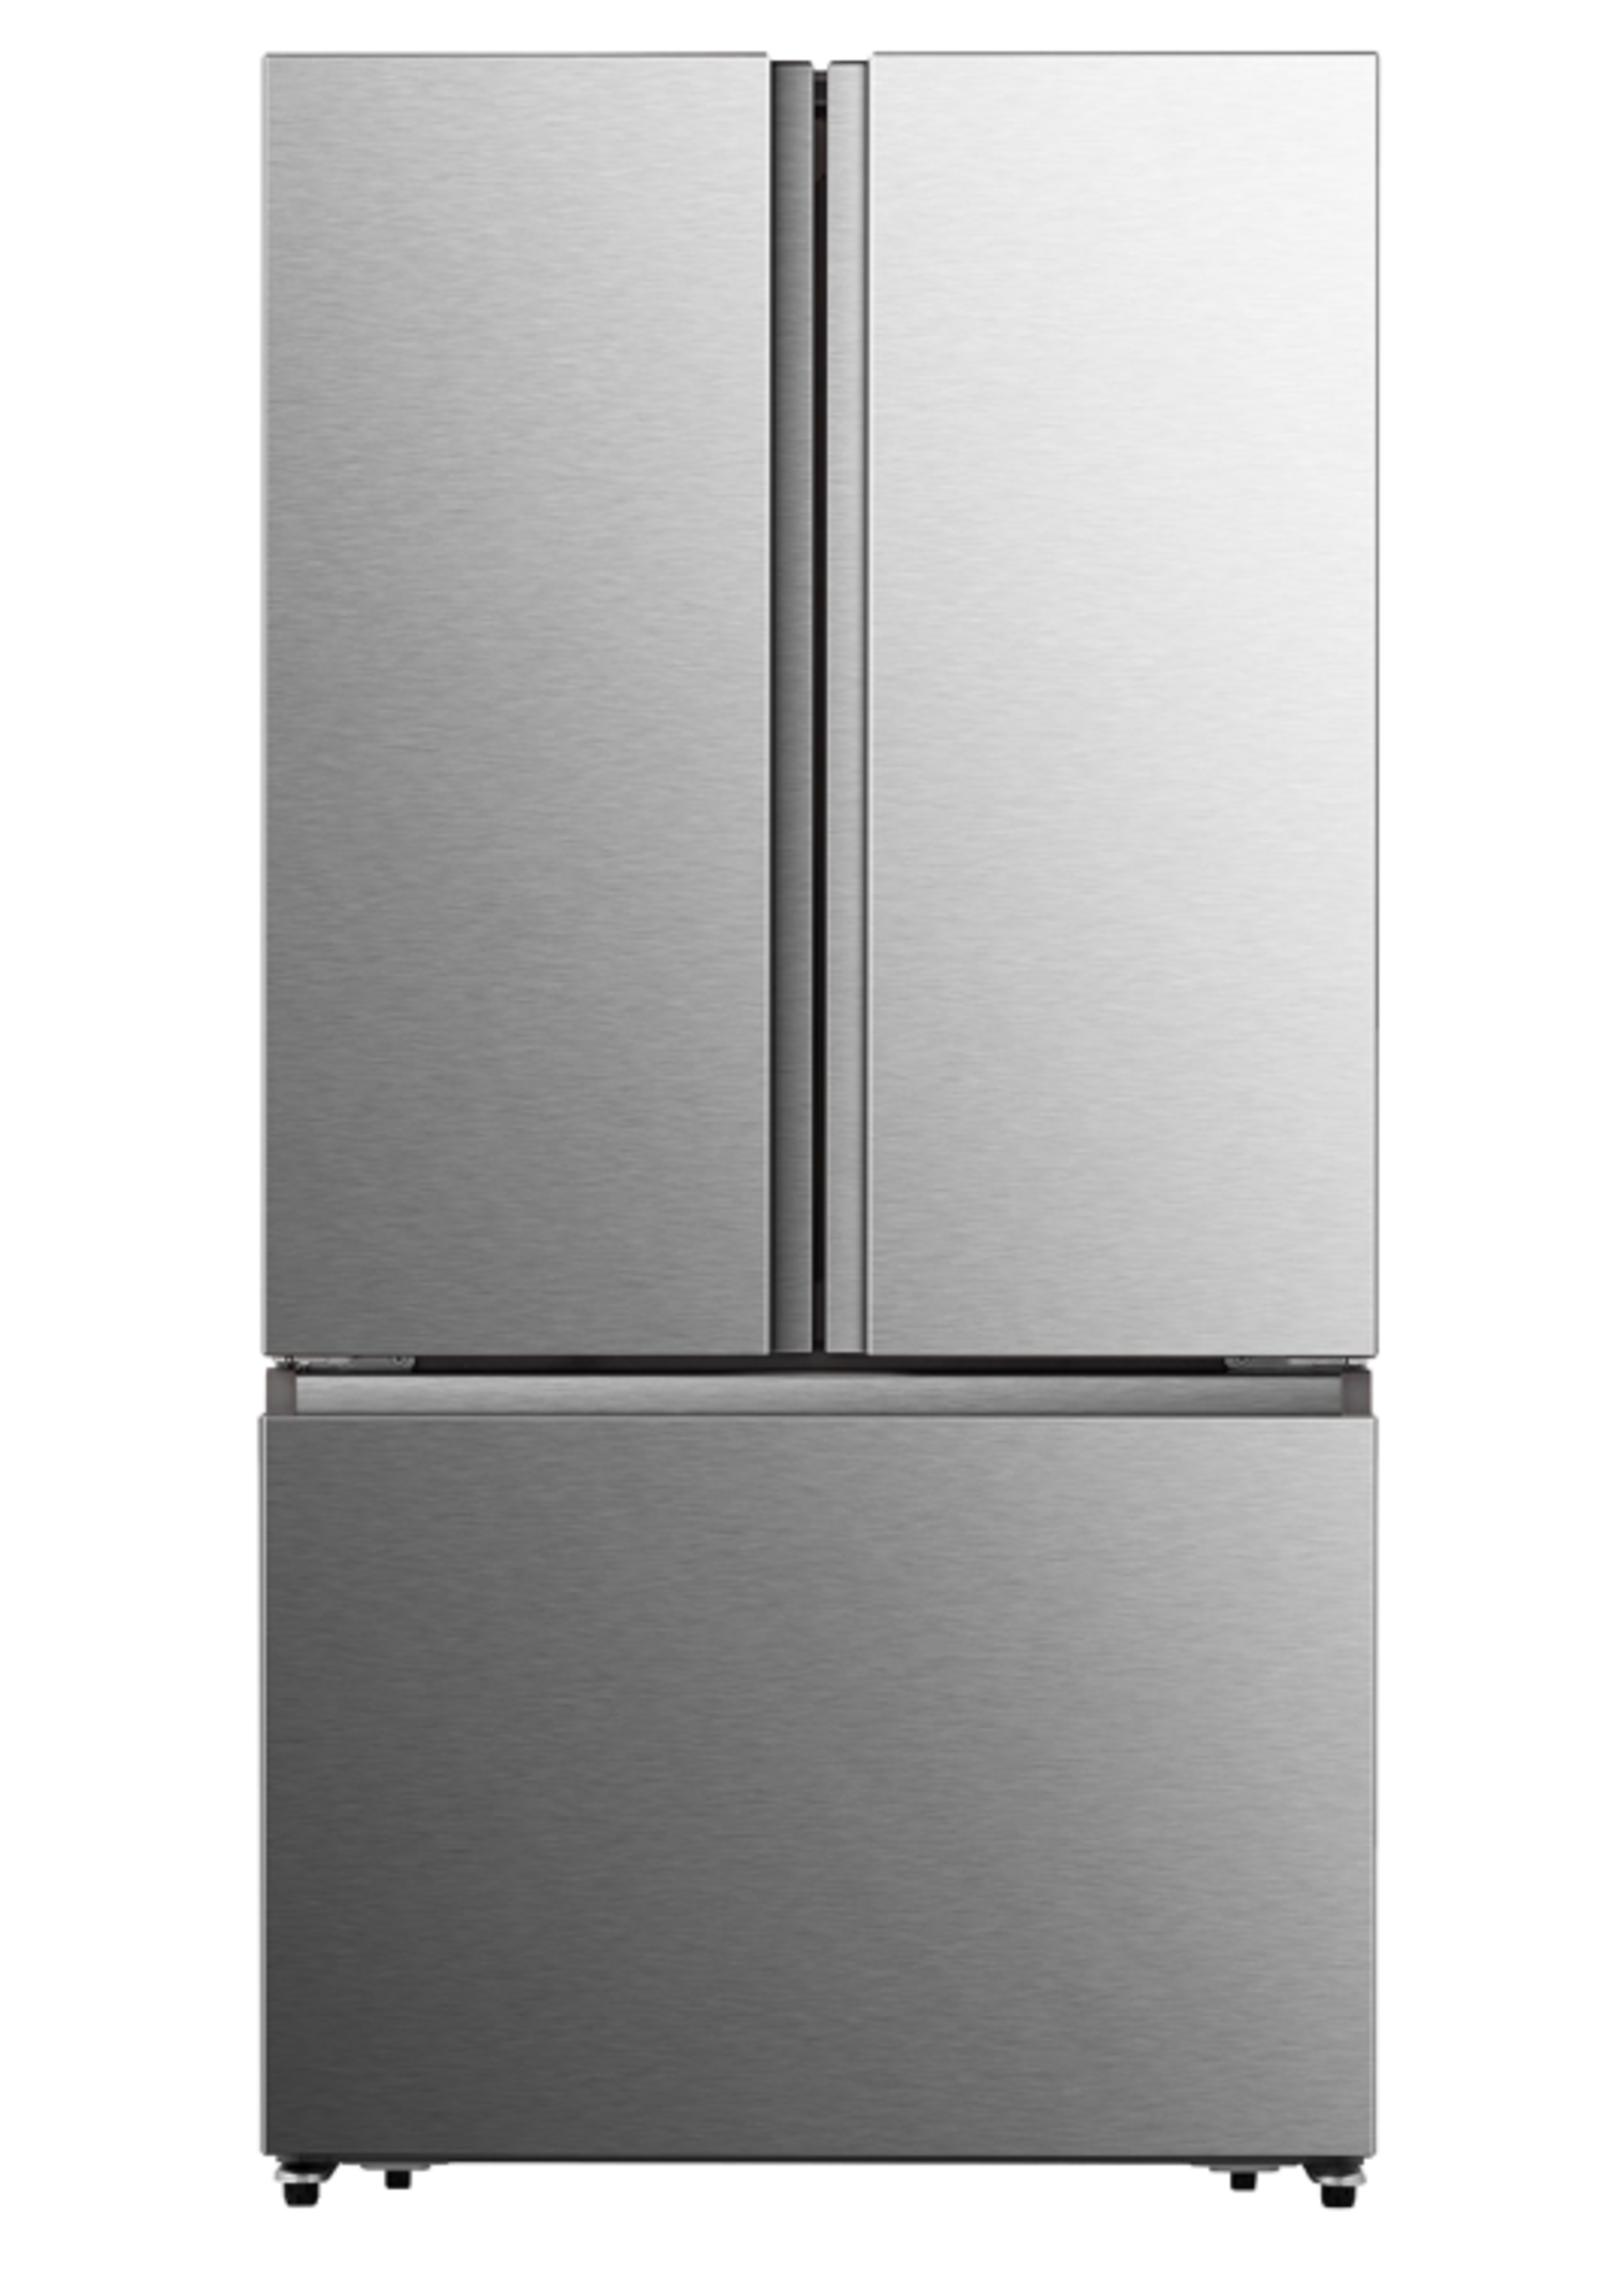 Hisense *HISENSE   HRF266N6CSE  26.6-cu ft French Door Refrigerator with Ice Maker (Fingerprint-Resistant Stainless Steel) ENERGY STAR